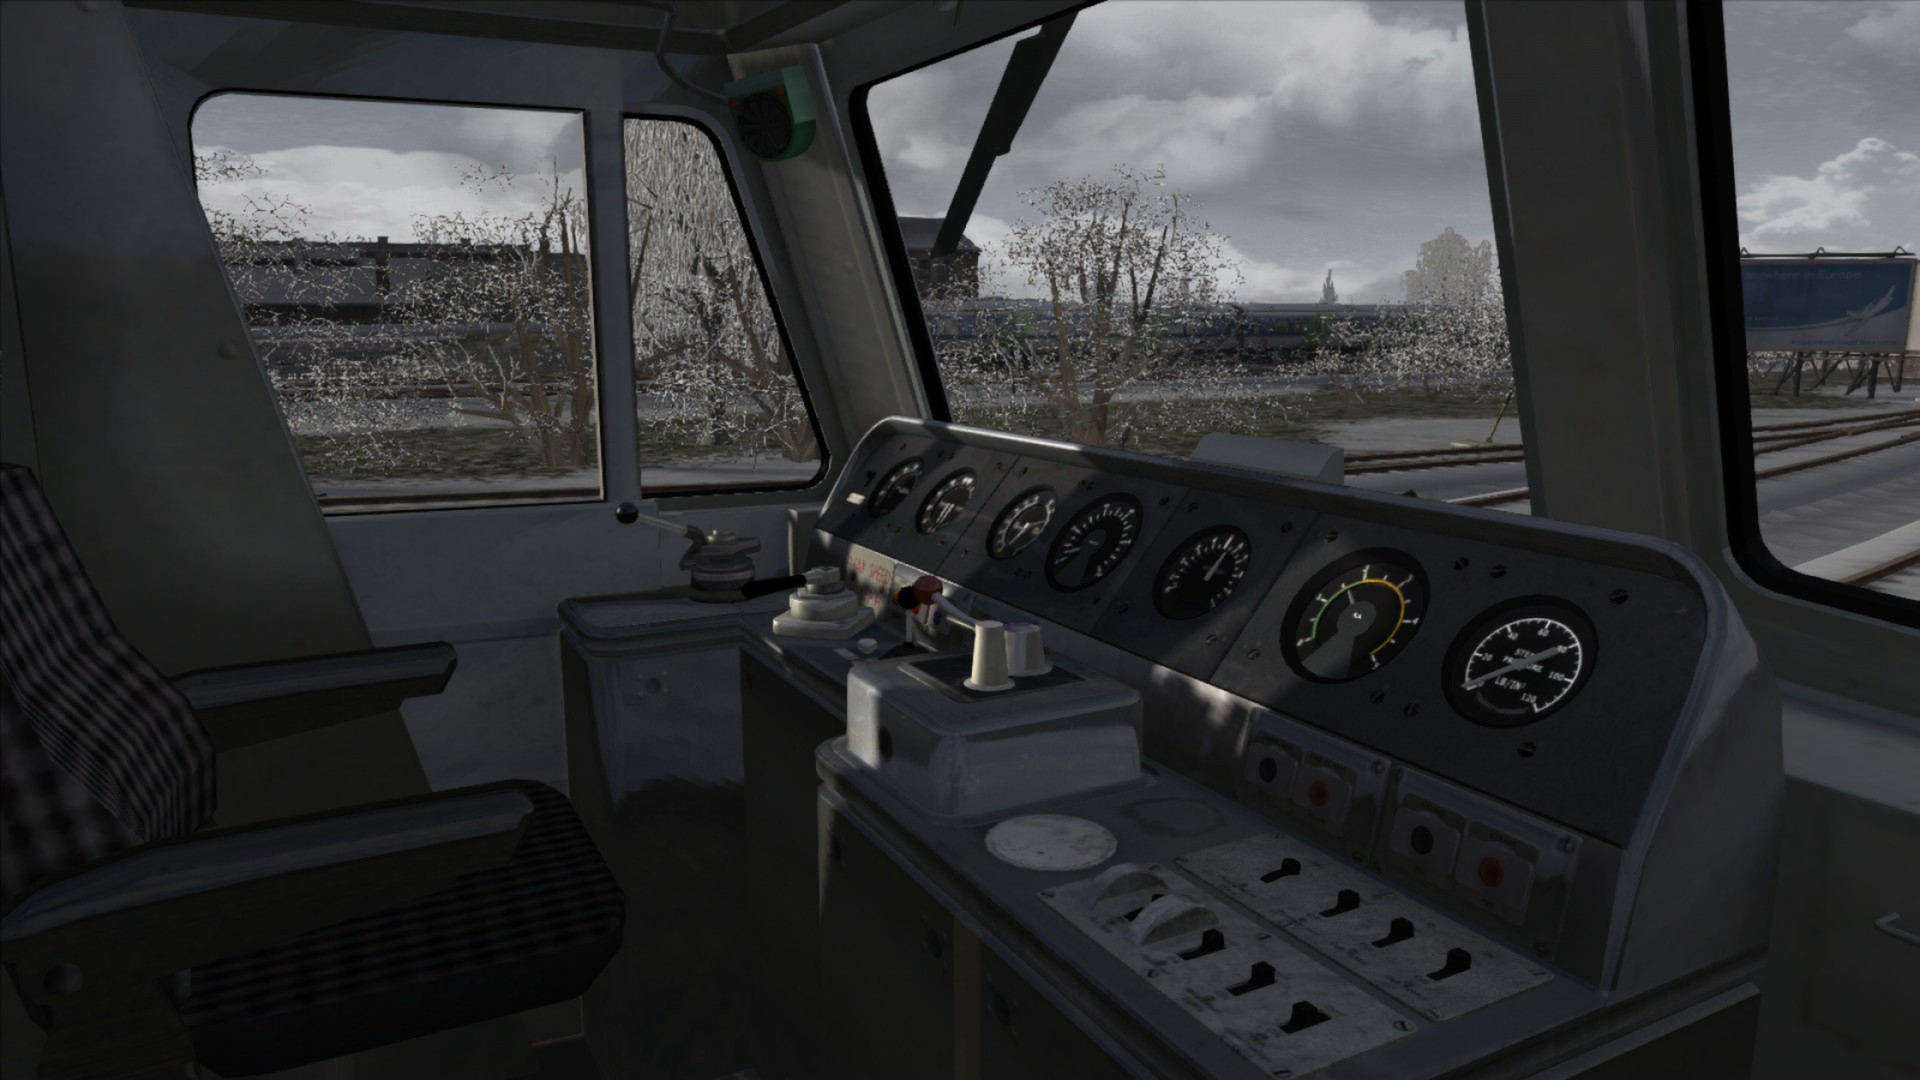 Train Simulator - Great Western Main Line Route Add-On DLC Steam CD Key